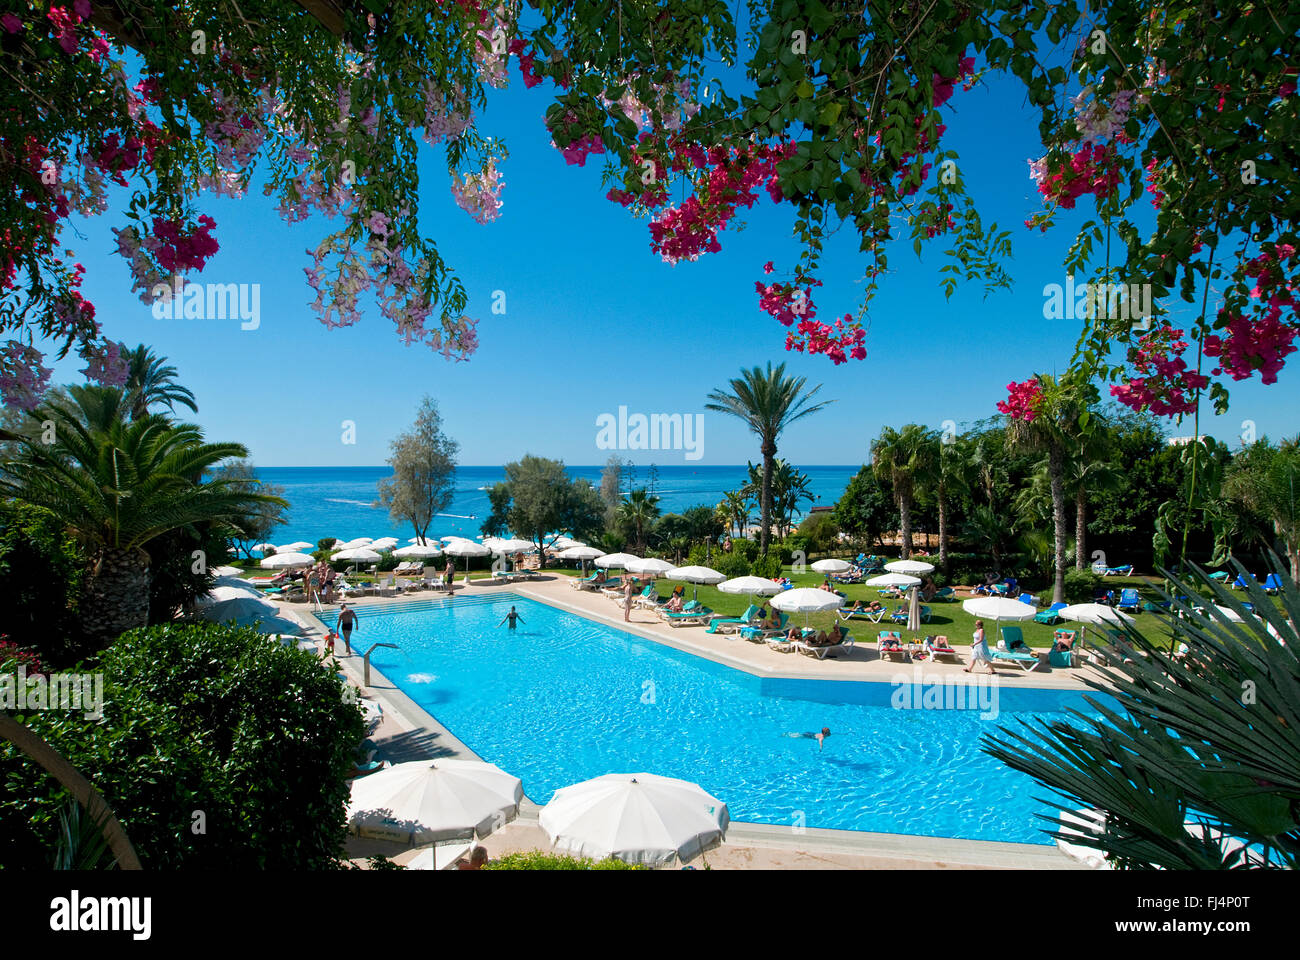 Le Grecian Sands Hotel, Ayia Napa, Chypre Banque D'Images